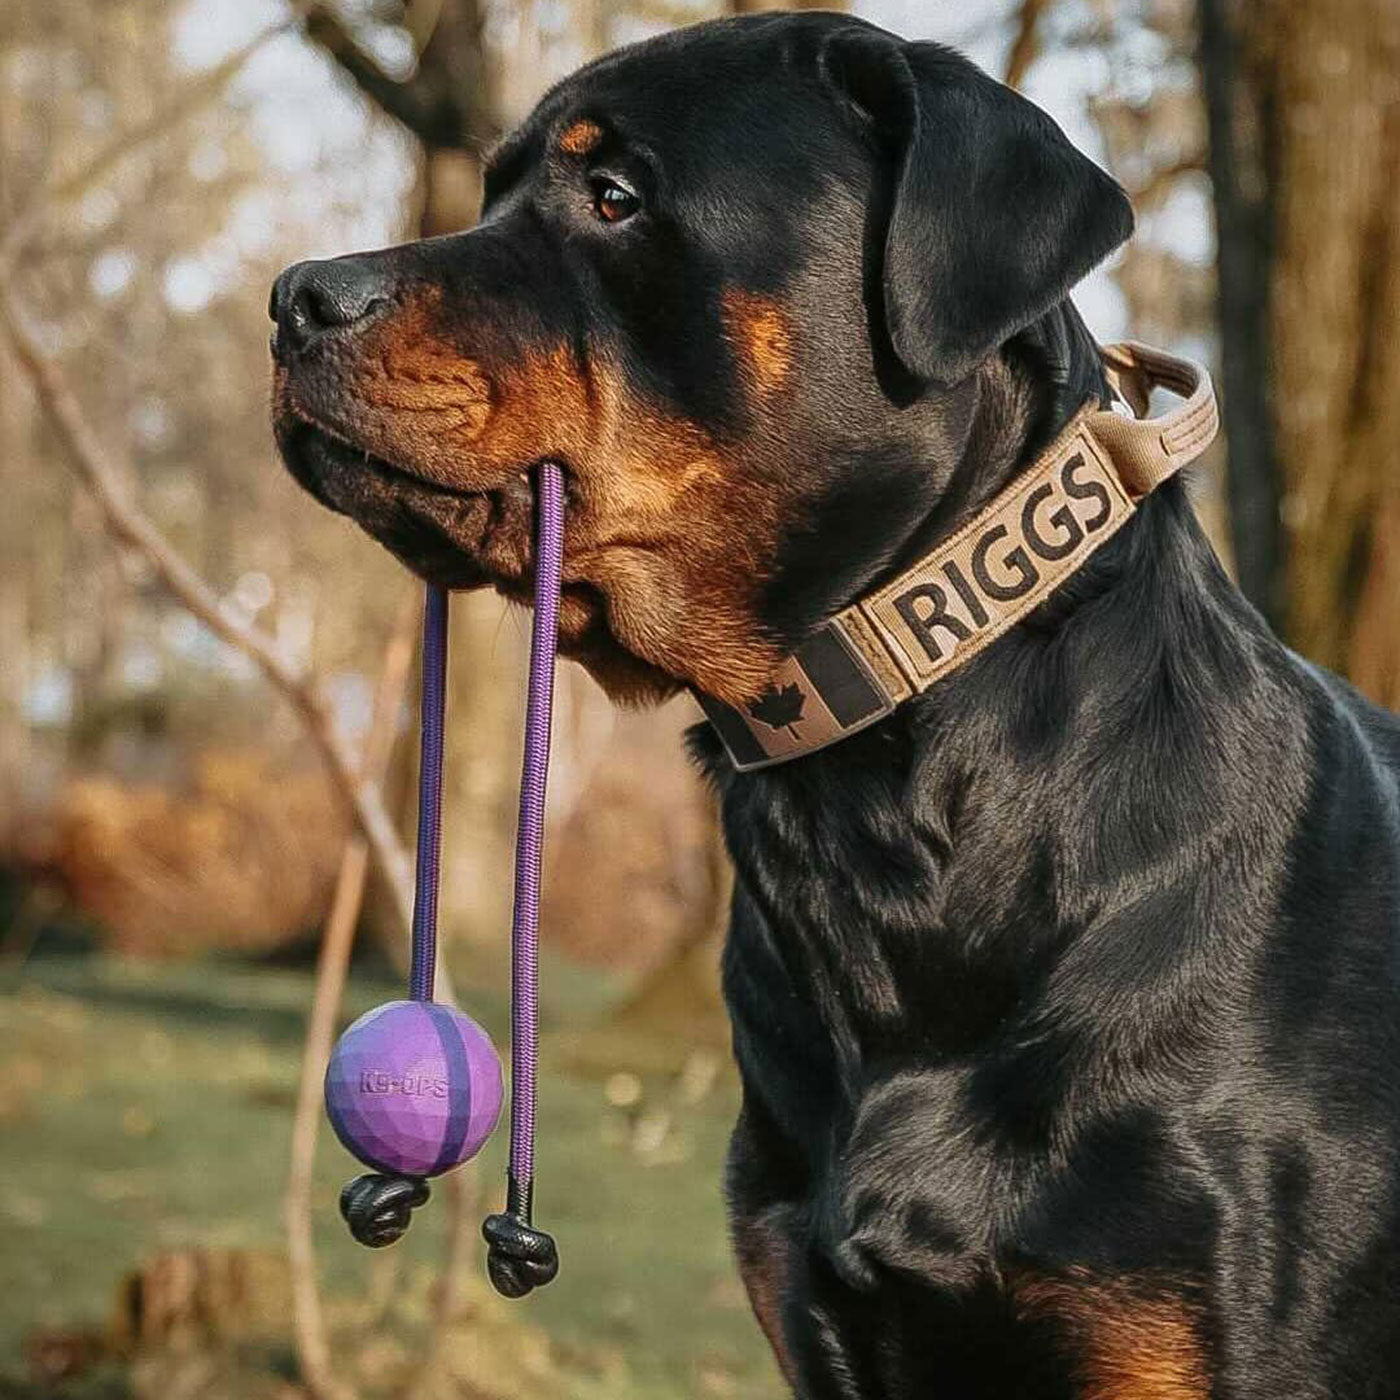 Kong Chew Resistant Dog Collar, Size: XL | PetSmart